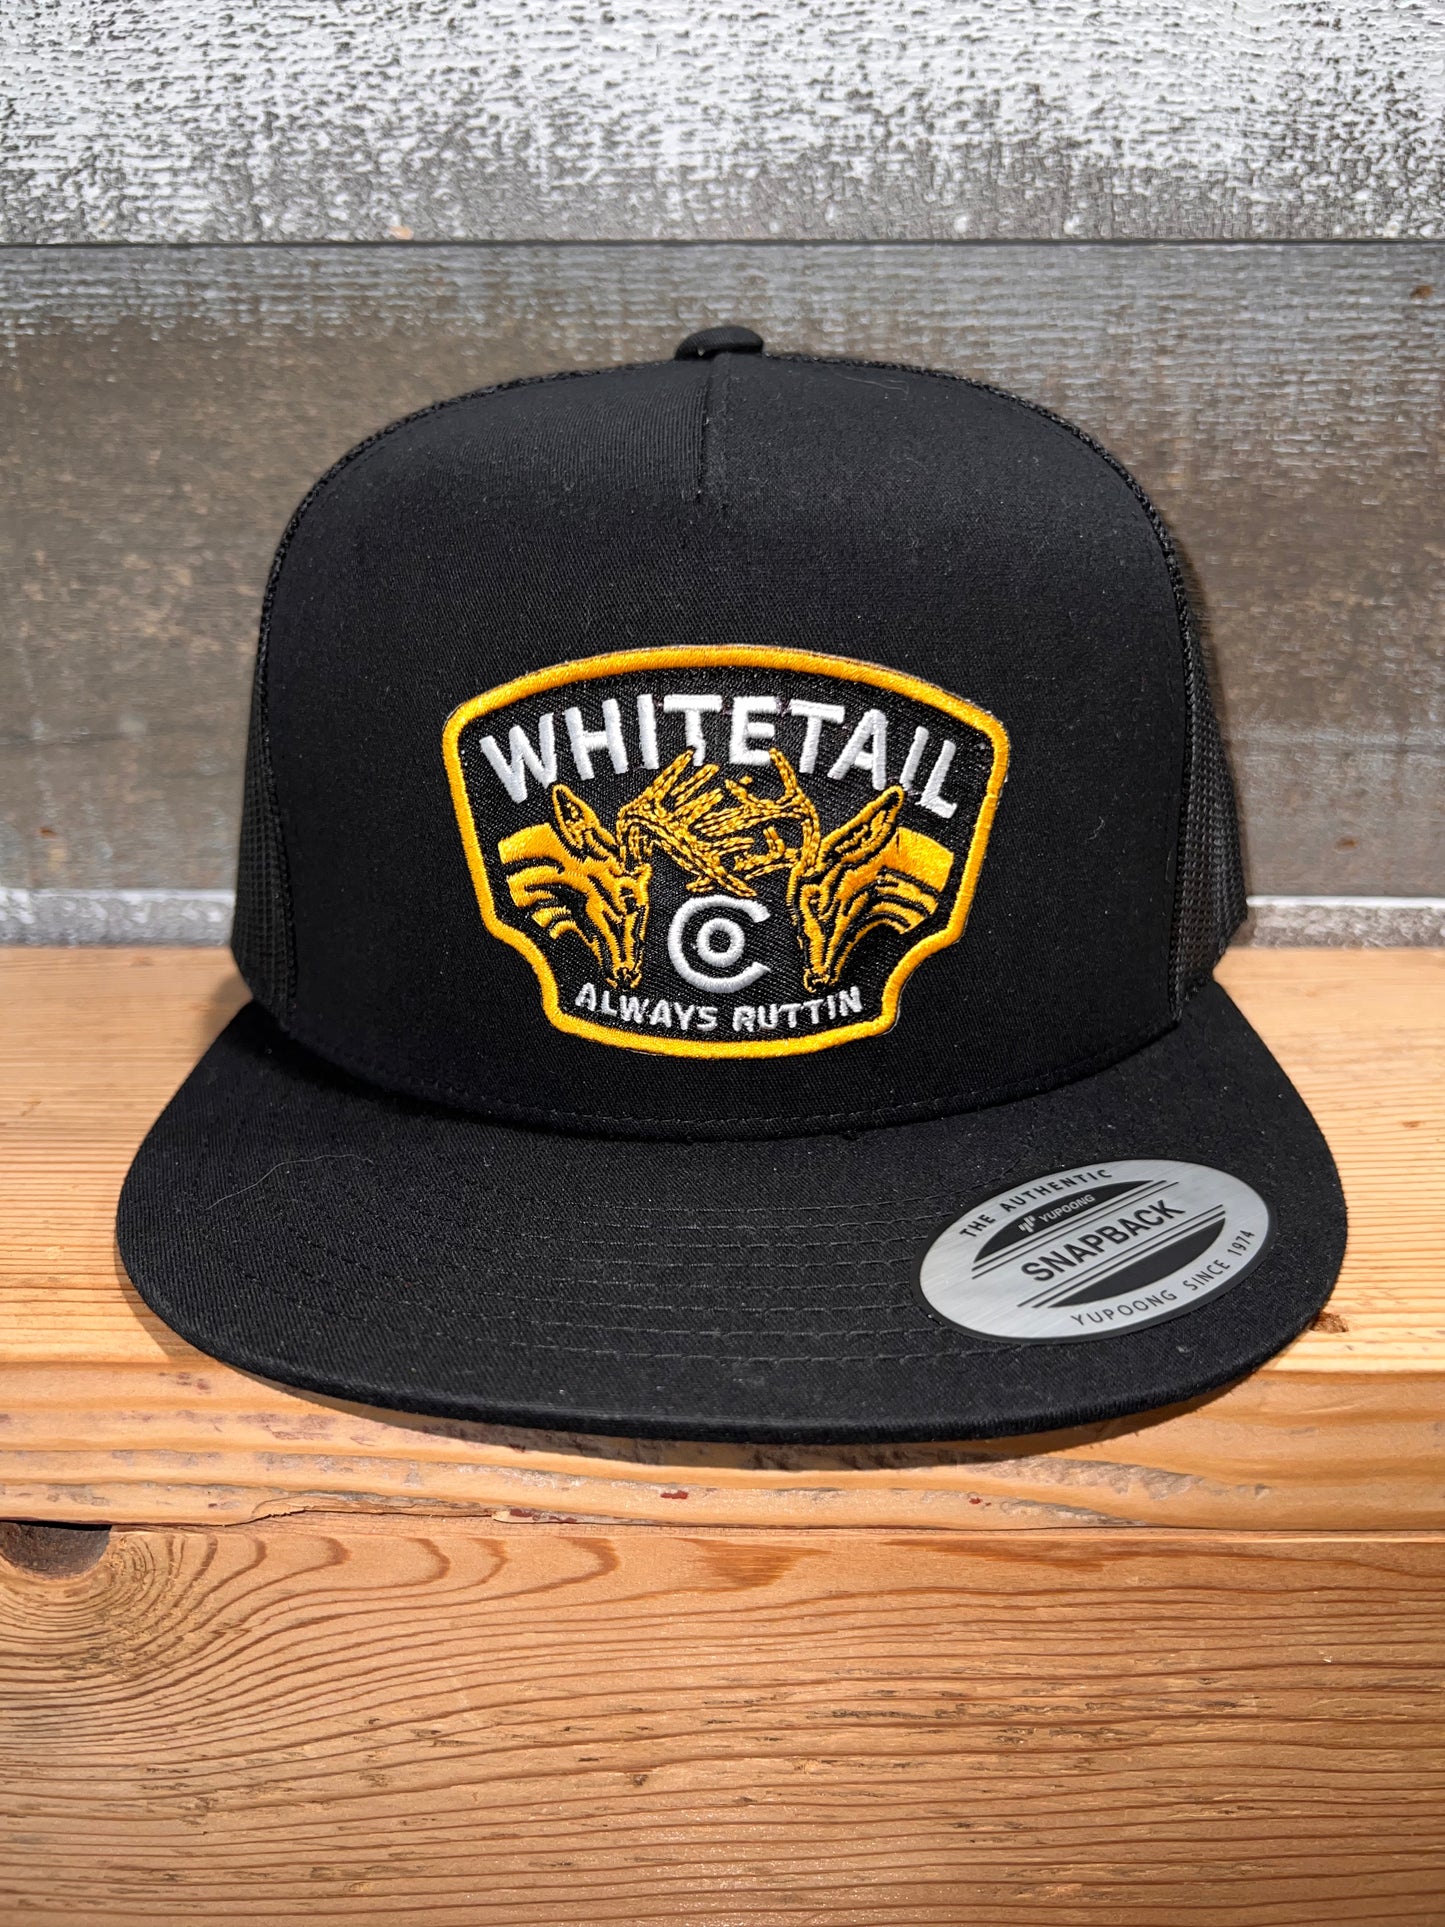 Whitetail Co. Always RUTTIN Yupoong 6006 Black